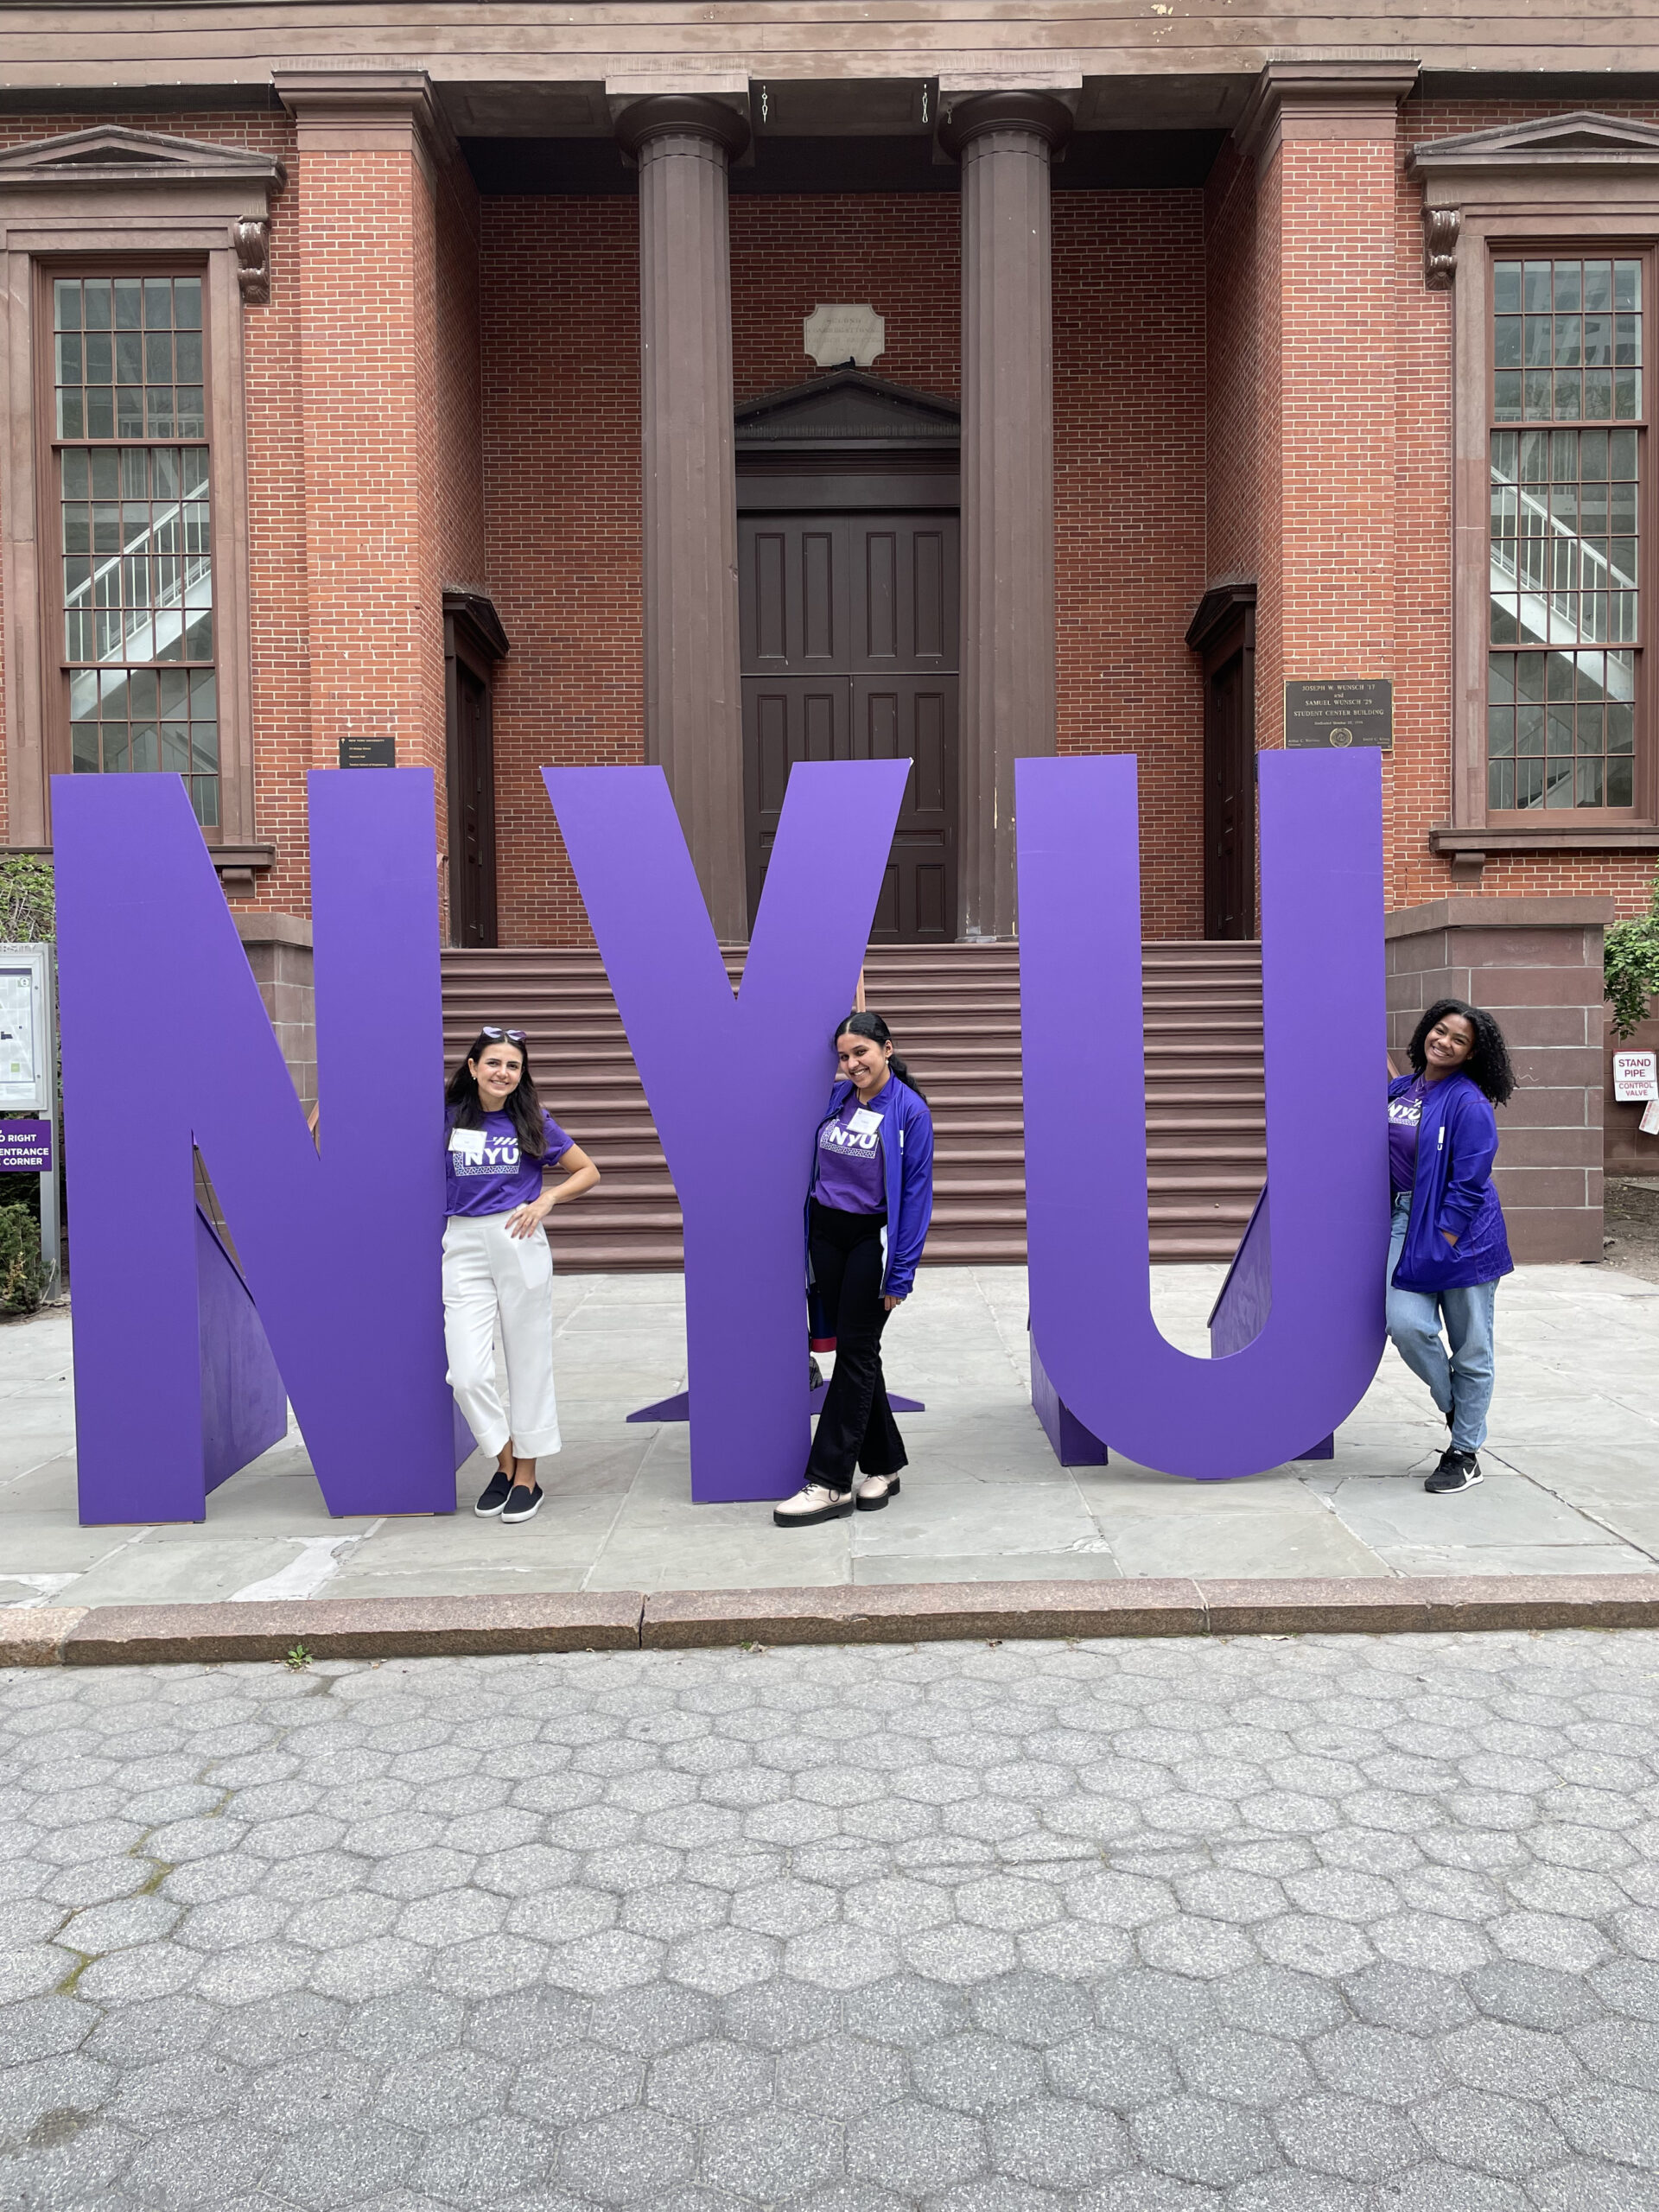 Anjana and fellow ambassadors pose with an NYU sign wearing purple gear.